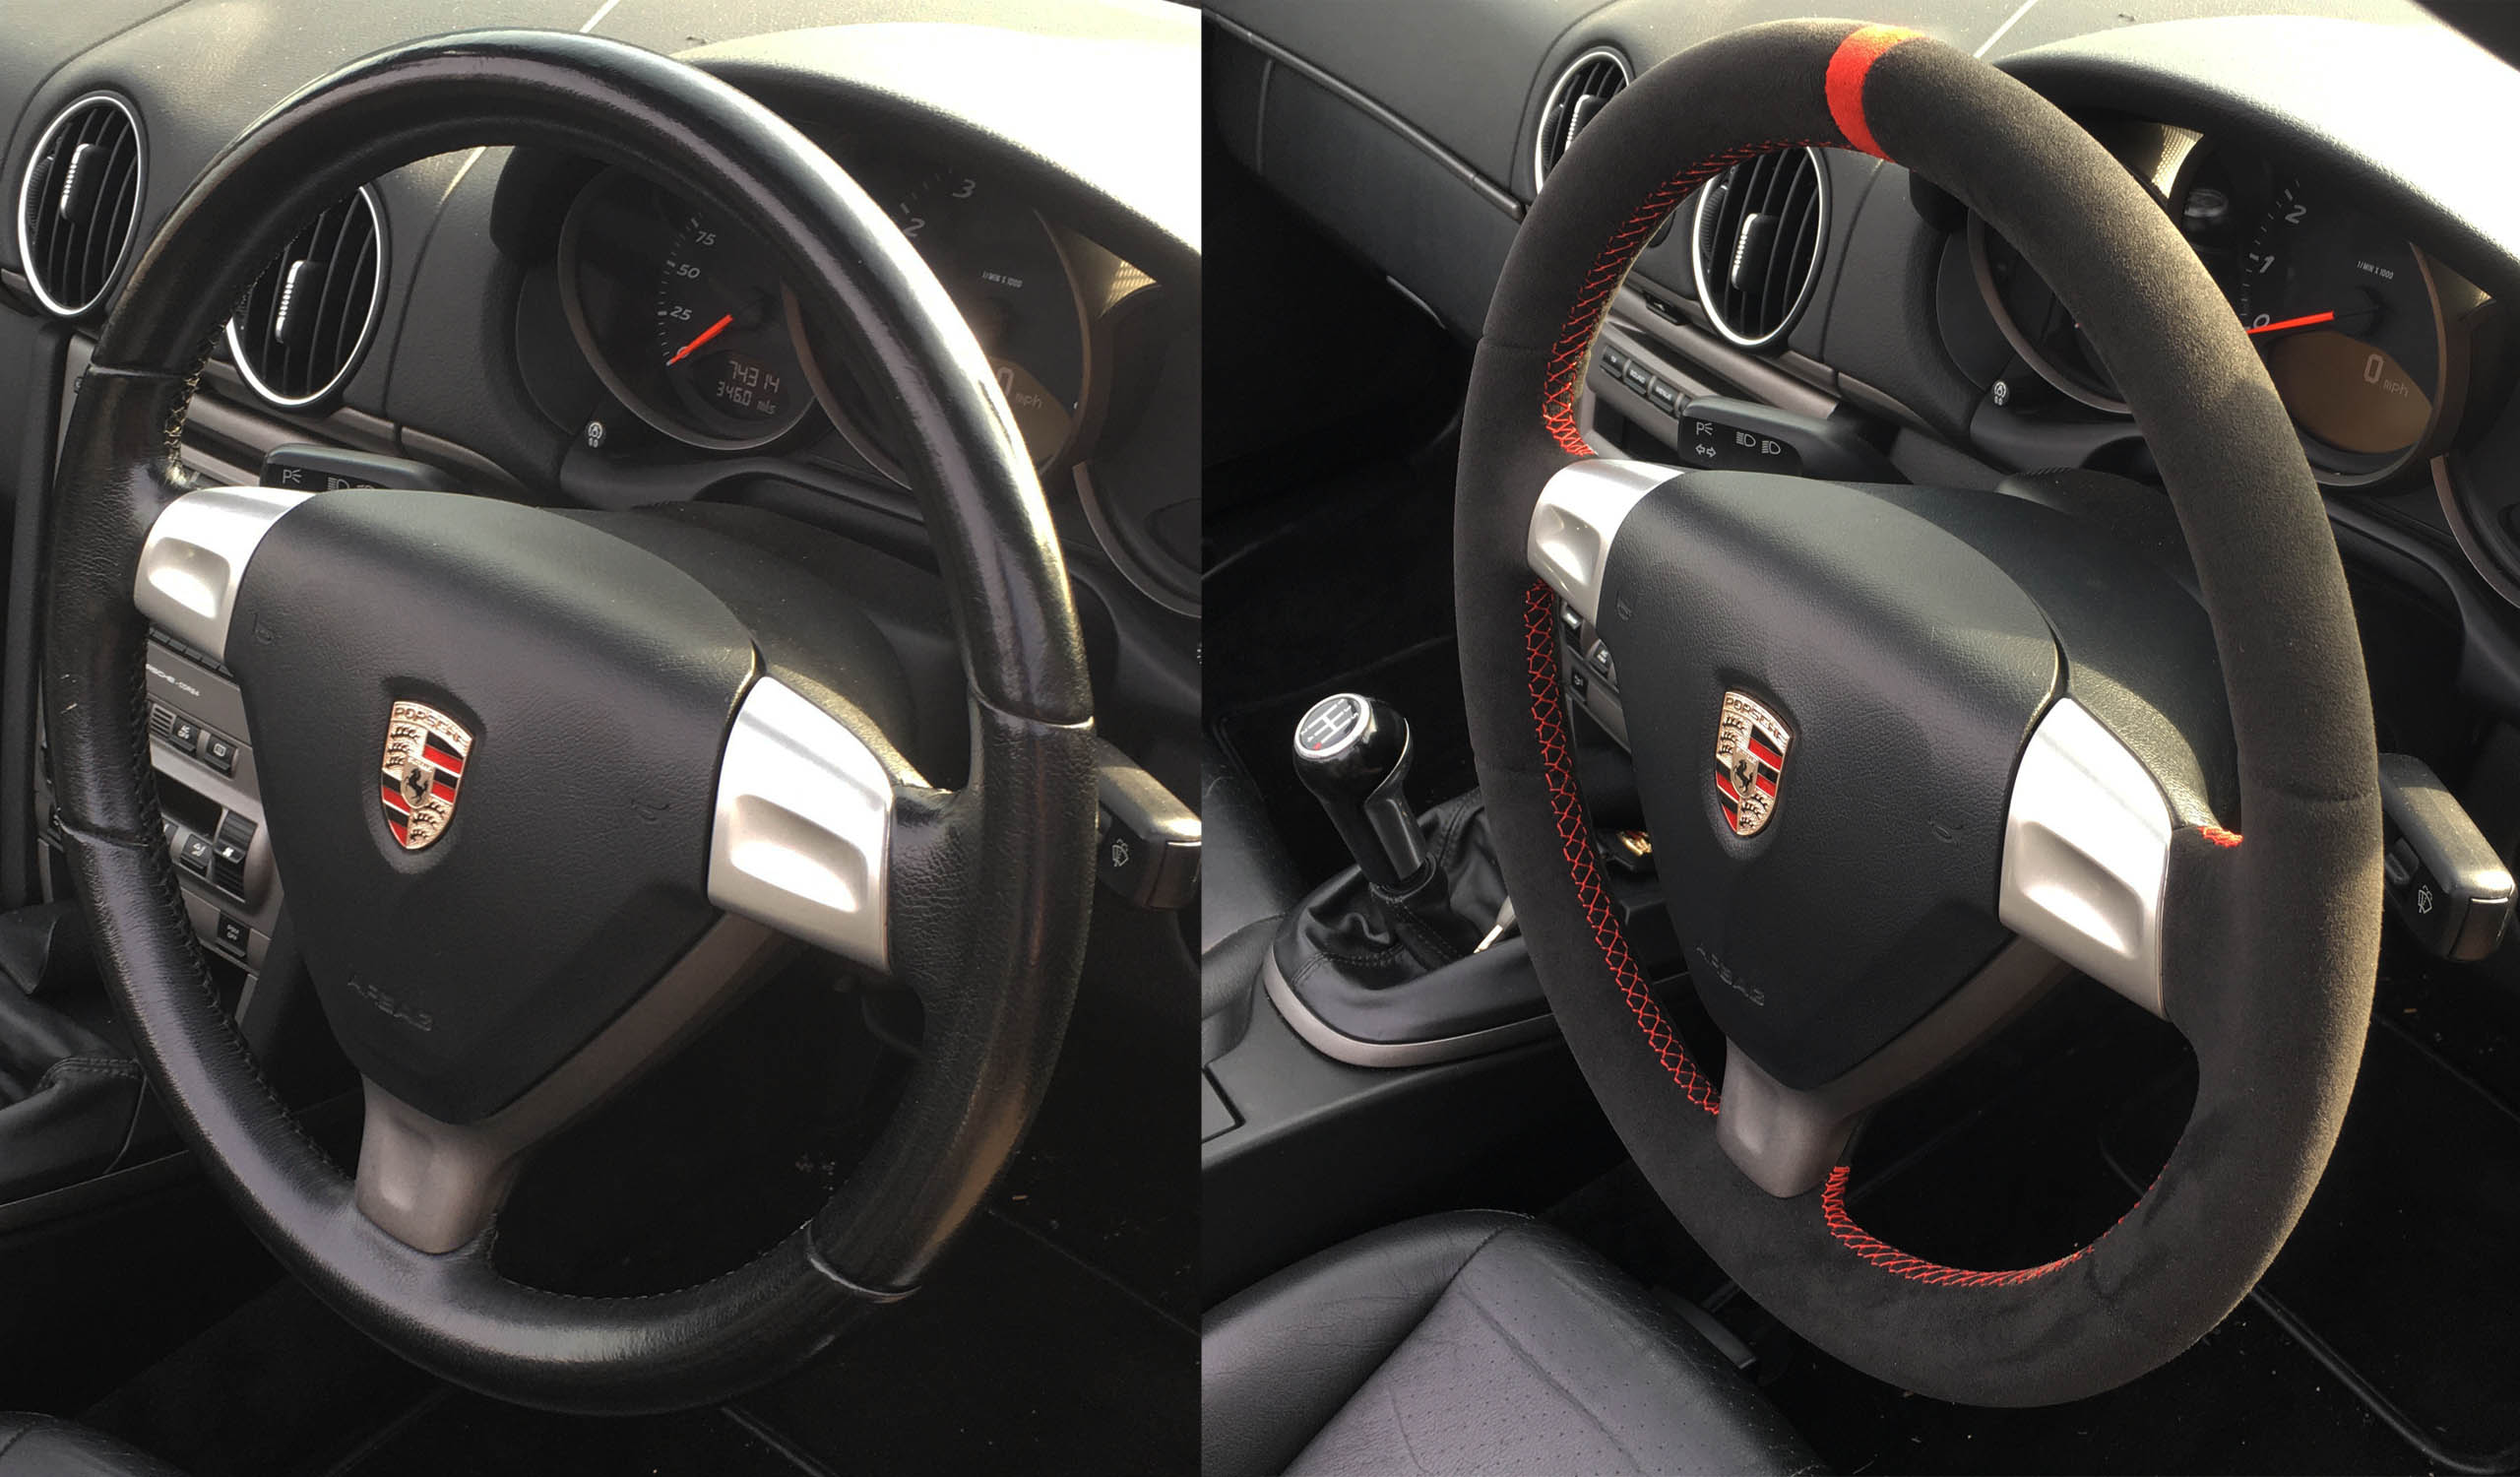 Porsche 987 Cayman steering wheel upgrade charcoal grey Alcantara red stitching and top marker re trim by Designls ltd 